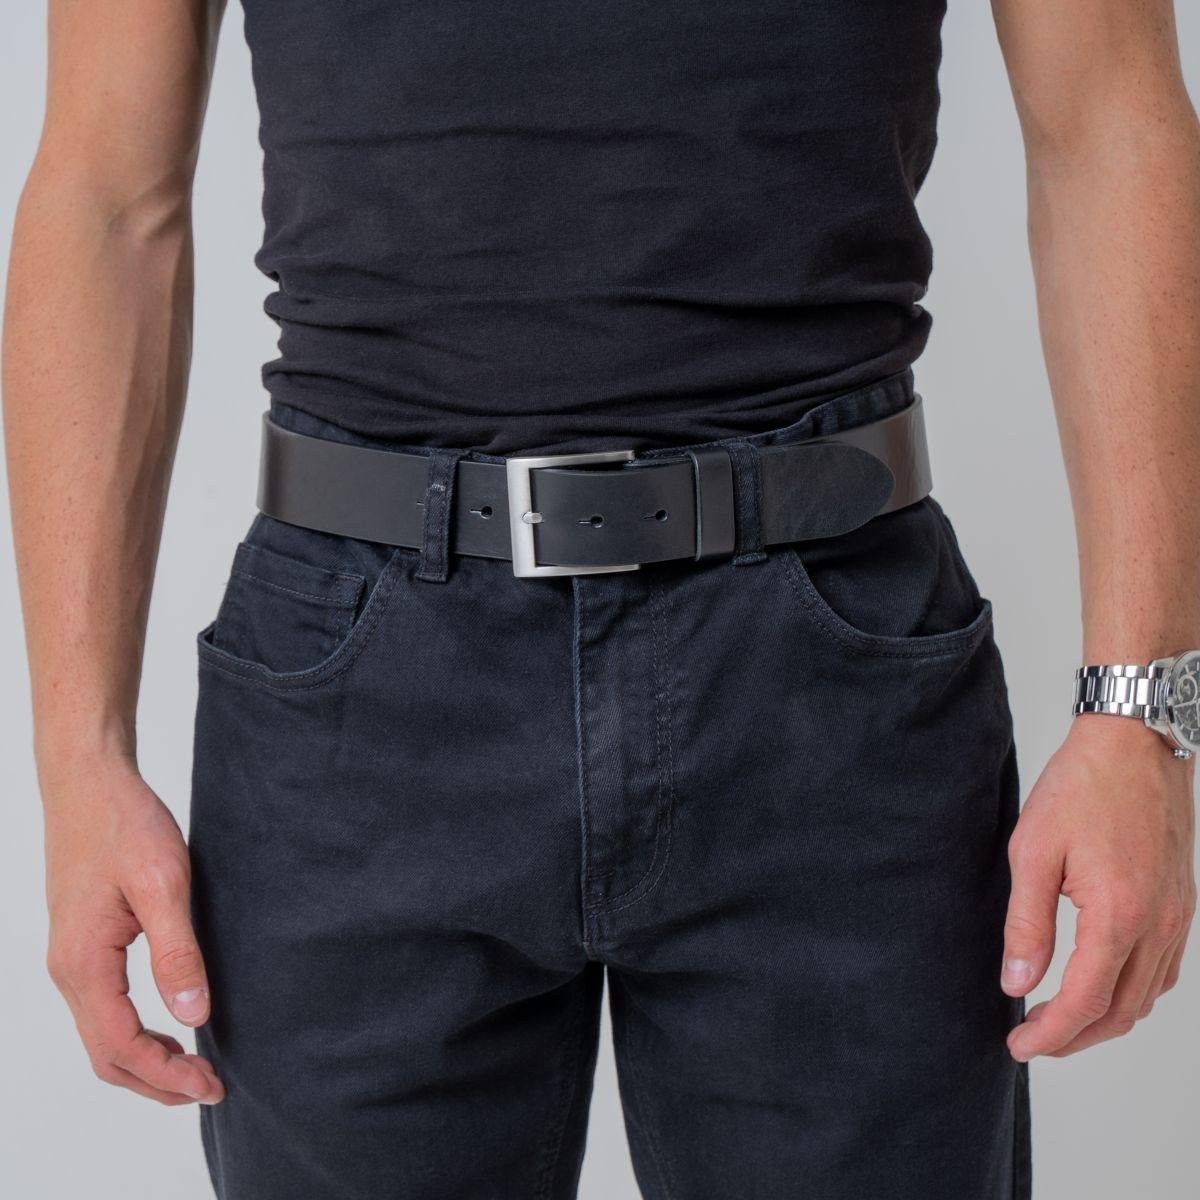 für 4 Jeans-Gürtel Leder-Gürtel Ledergürtel Hochwertiger - aus Vollrindleder Silber cm Beige, BELTINGER He